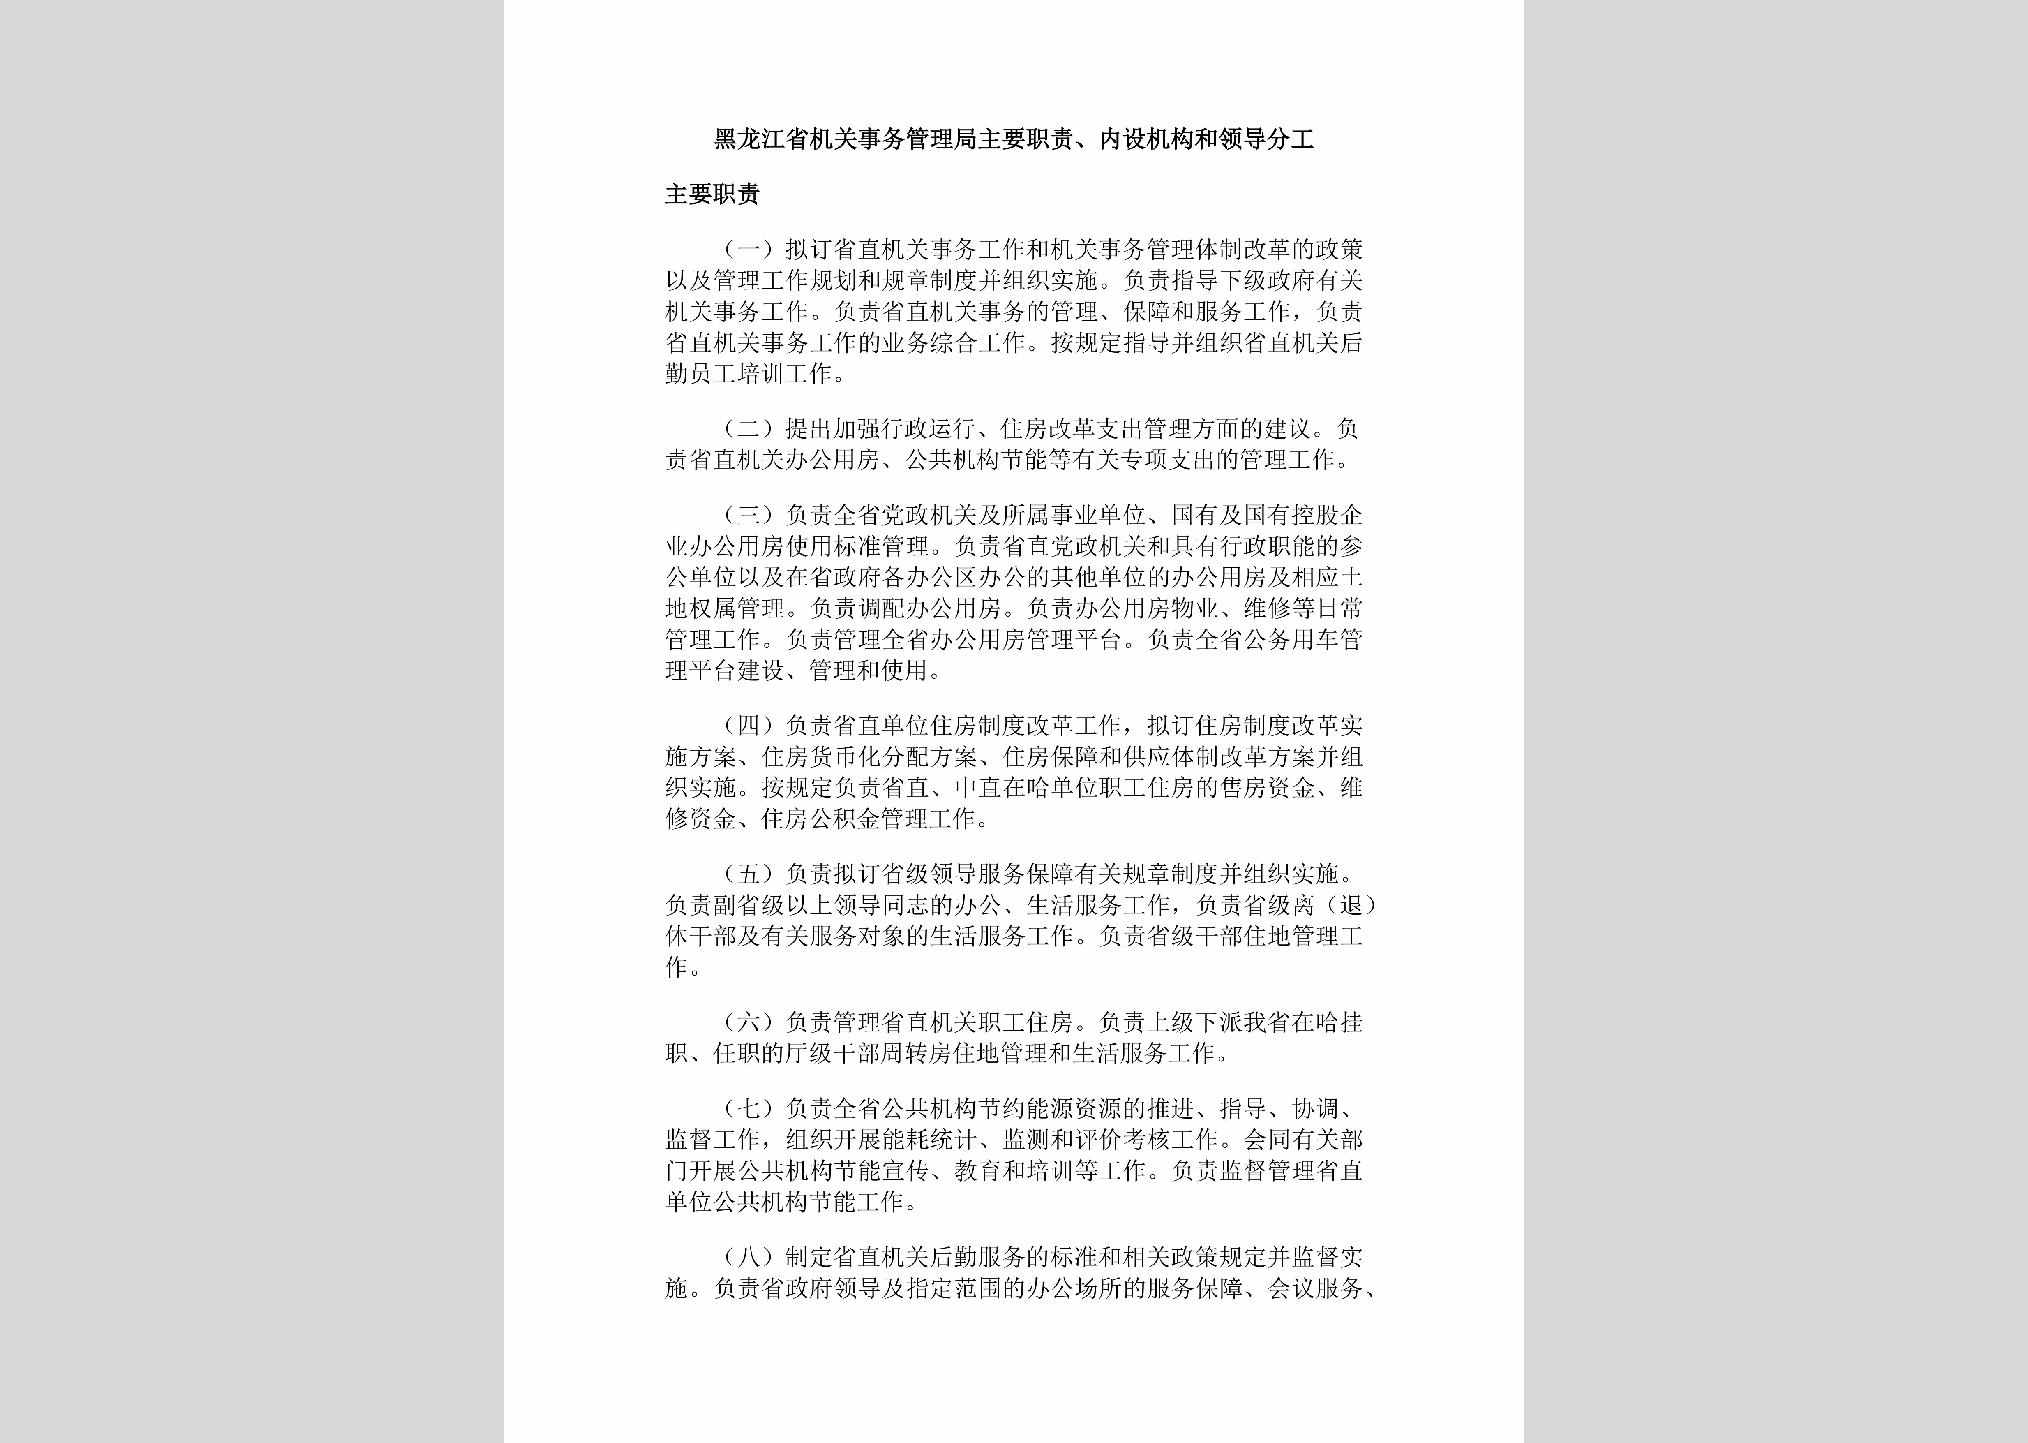 HLJ-ZYZZNSJG-2019：黑龙江省人民政府办公厅主要职责、内设机构和领导分工